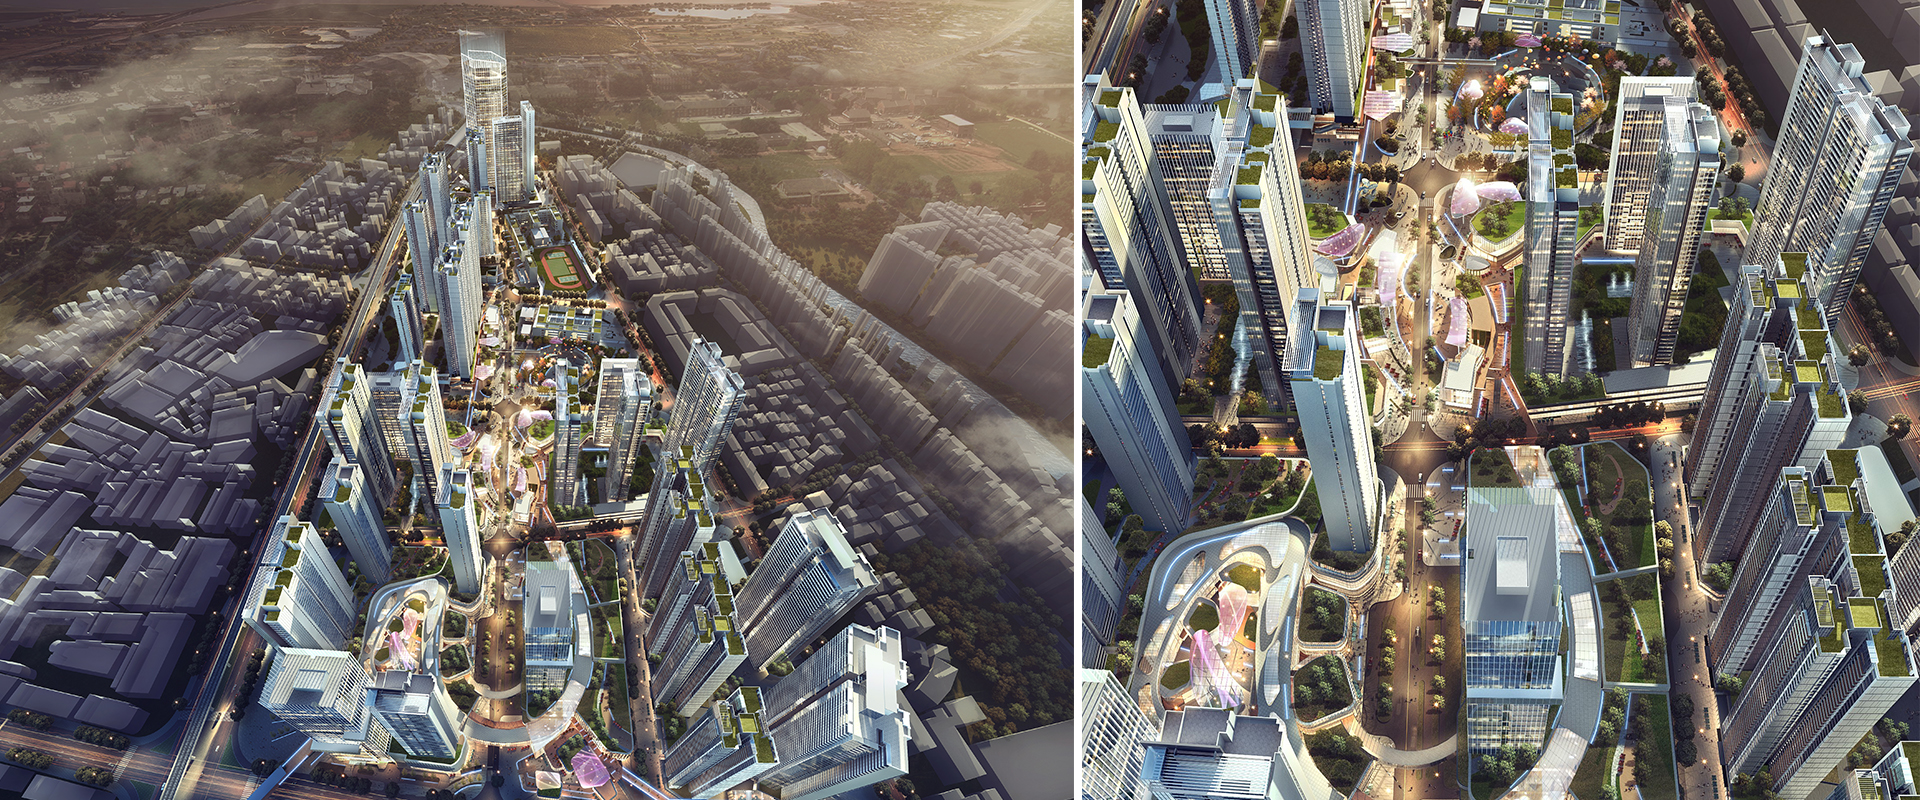 H-Change Shenzhen Longgang Huanglongpo District Urban Design